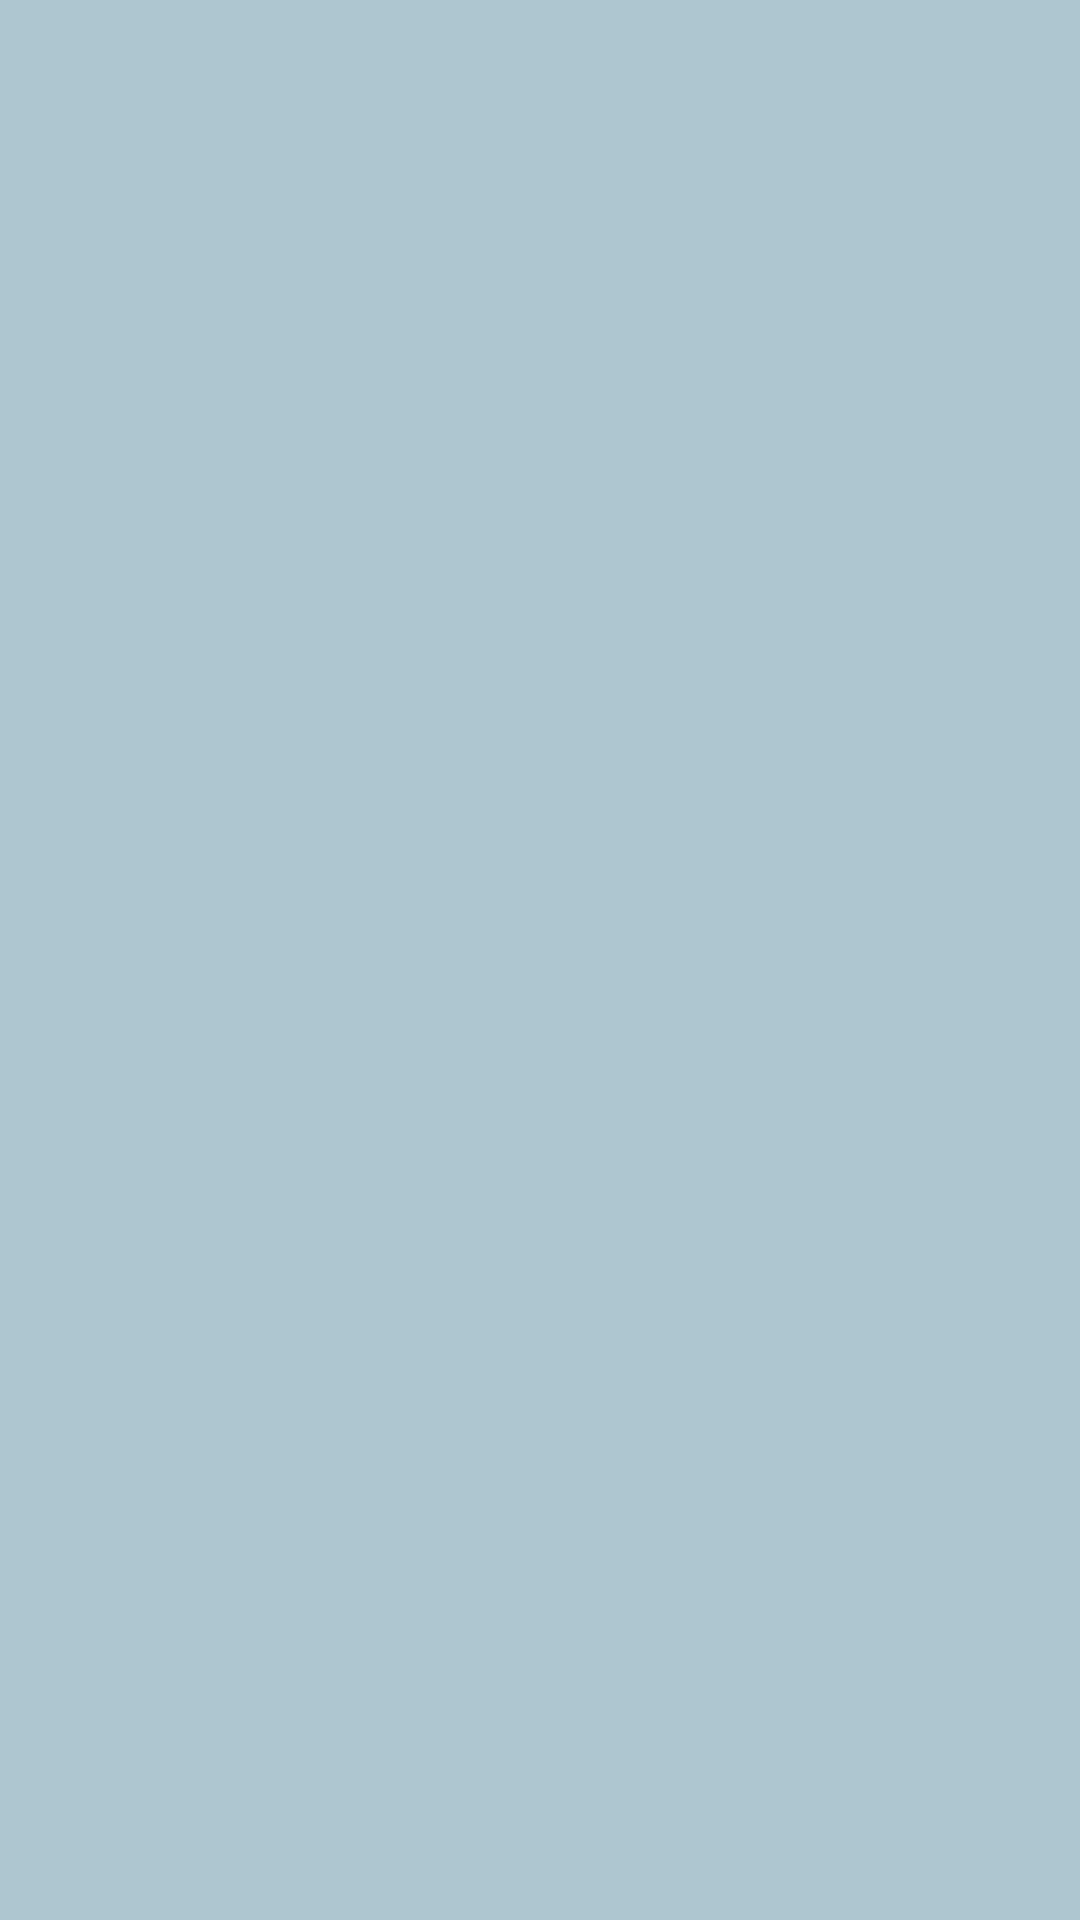 1080x1920 Pastel Blue Solid Color Background